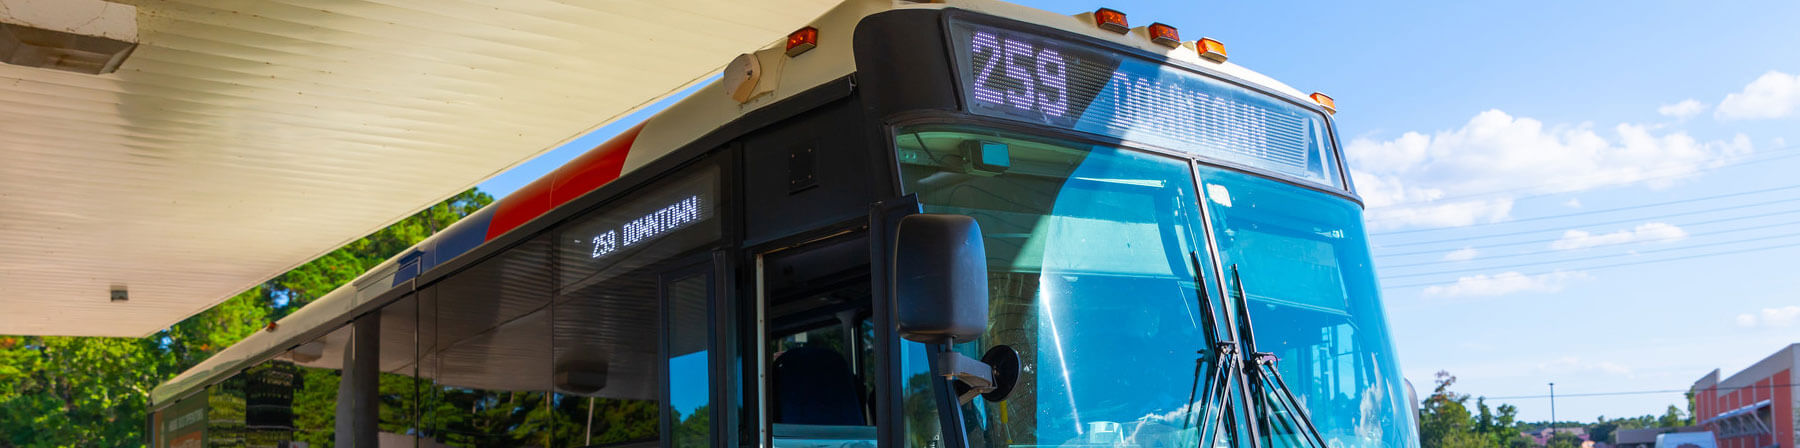 259 Eastex / Townsen / Kingwood Park & Ride Bus